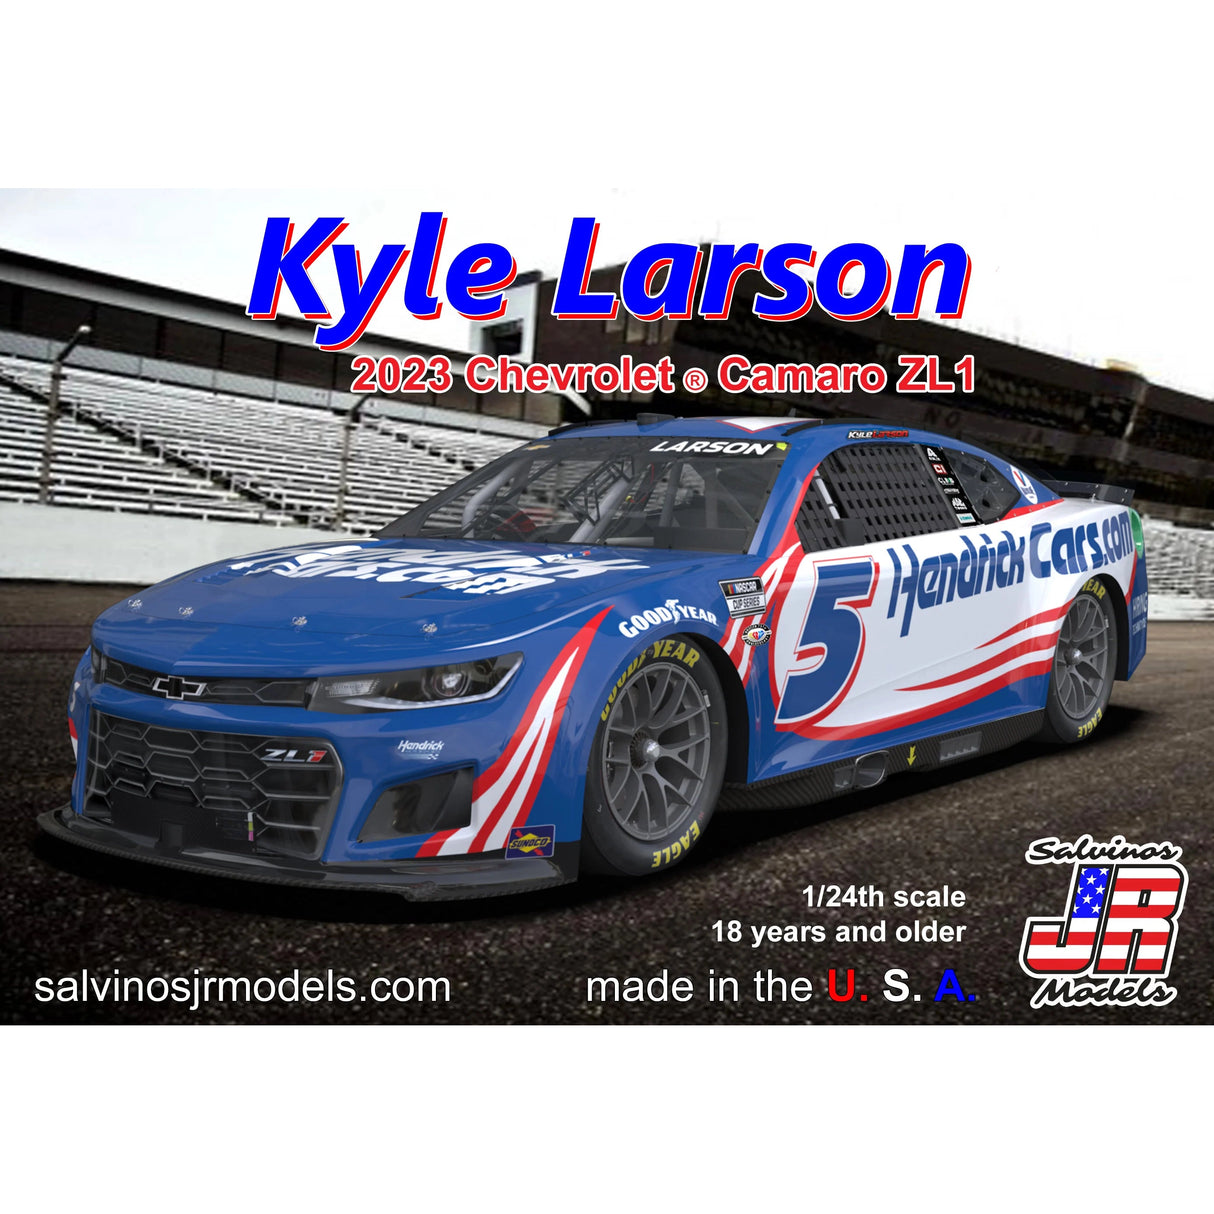 Salvinos JR Models Hendrick Motorsports Kyle Larson 2023 NEXT GEN Primary Chevrolet Camaro